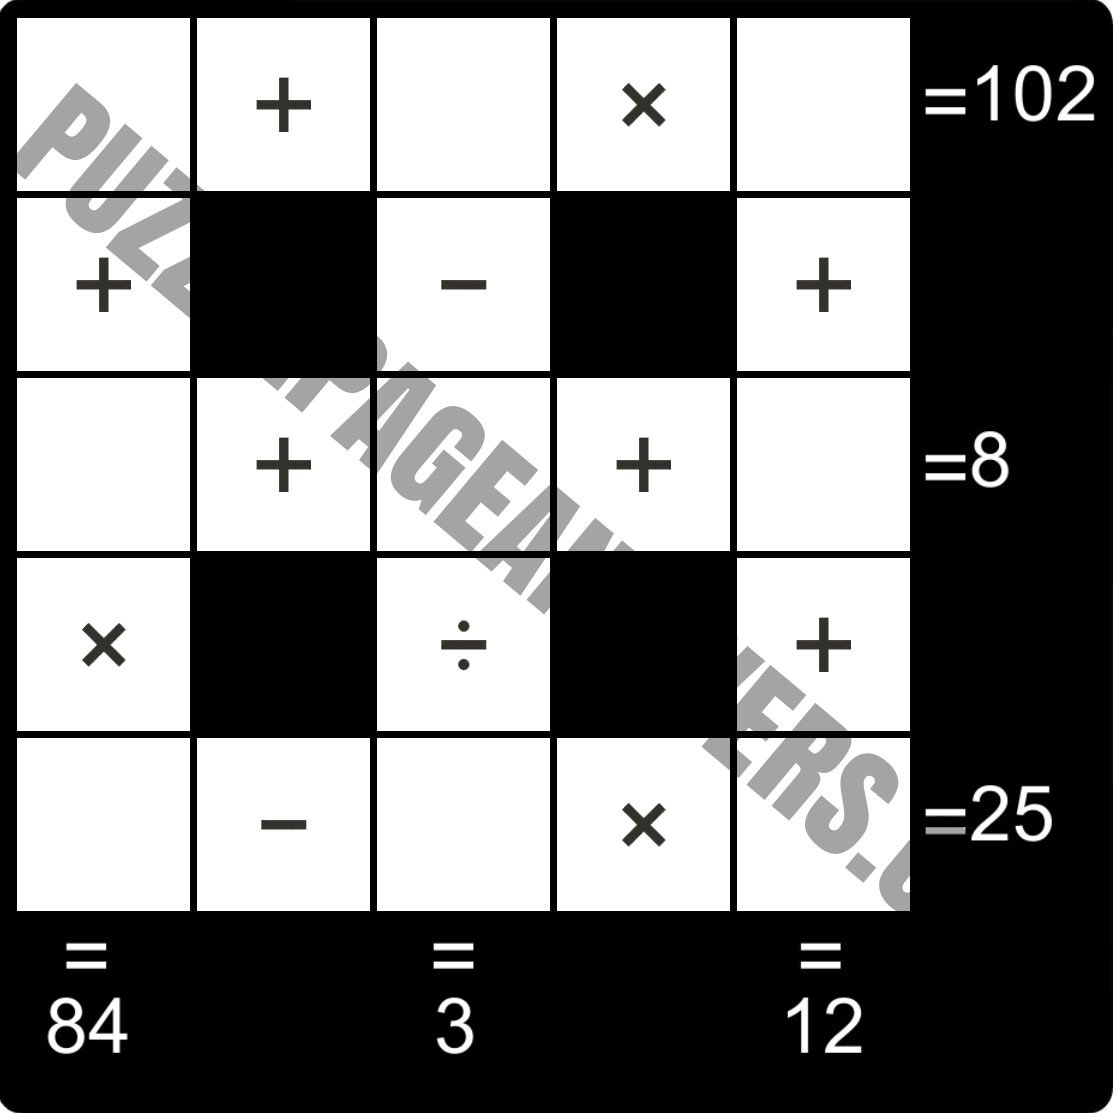 Puzzle Page Cross Sum November 24 2019 - PuzzlePageAnswers.com